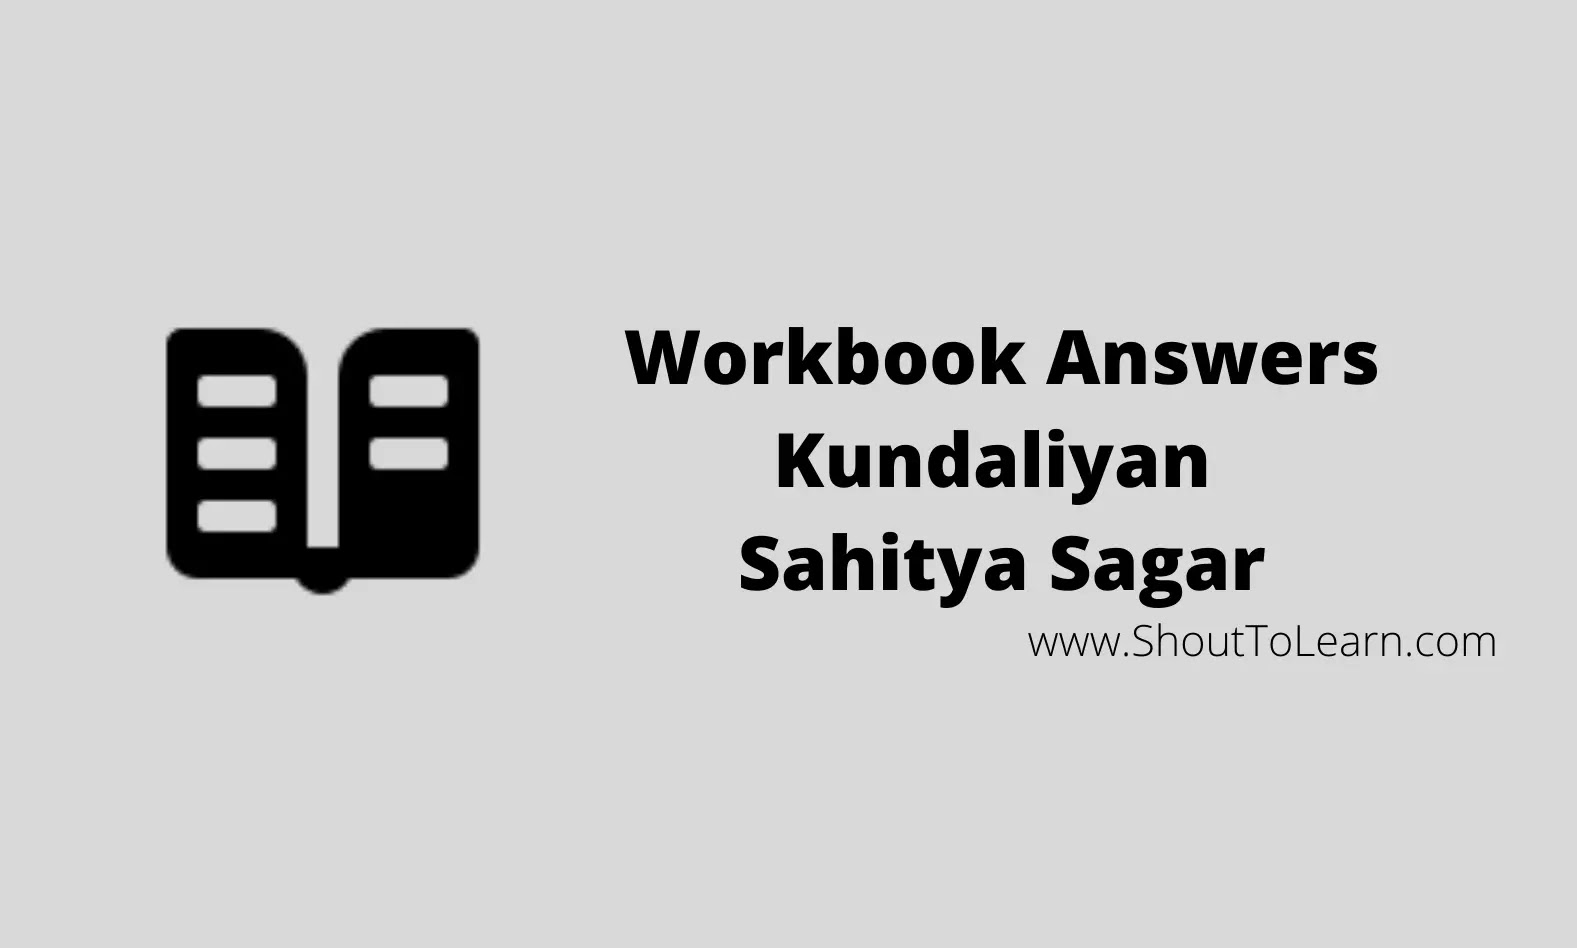 Workbook Answers of Girdhar Ki Kundaliyan - Sahitya Sagar